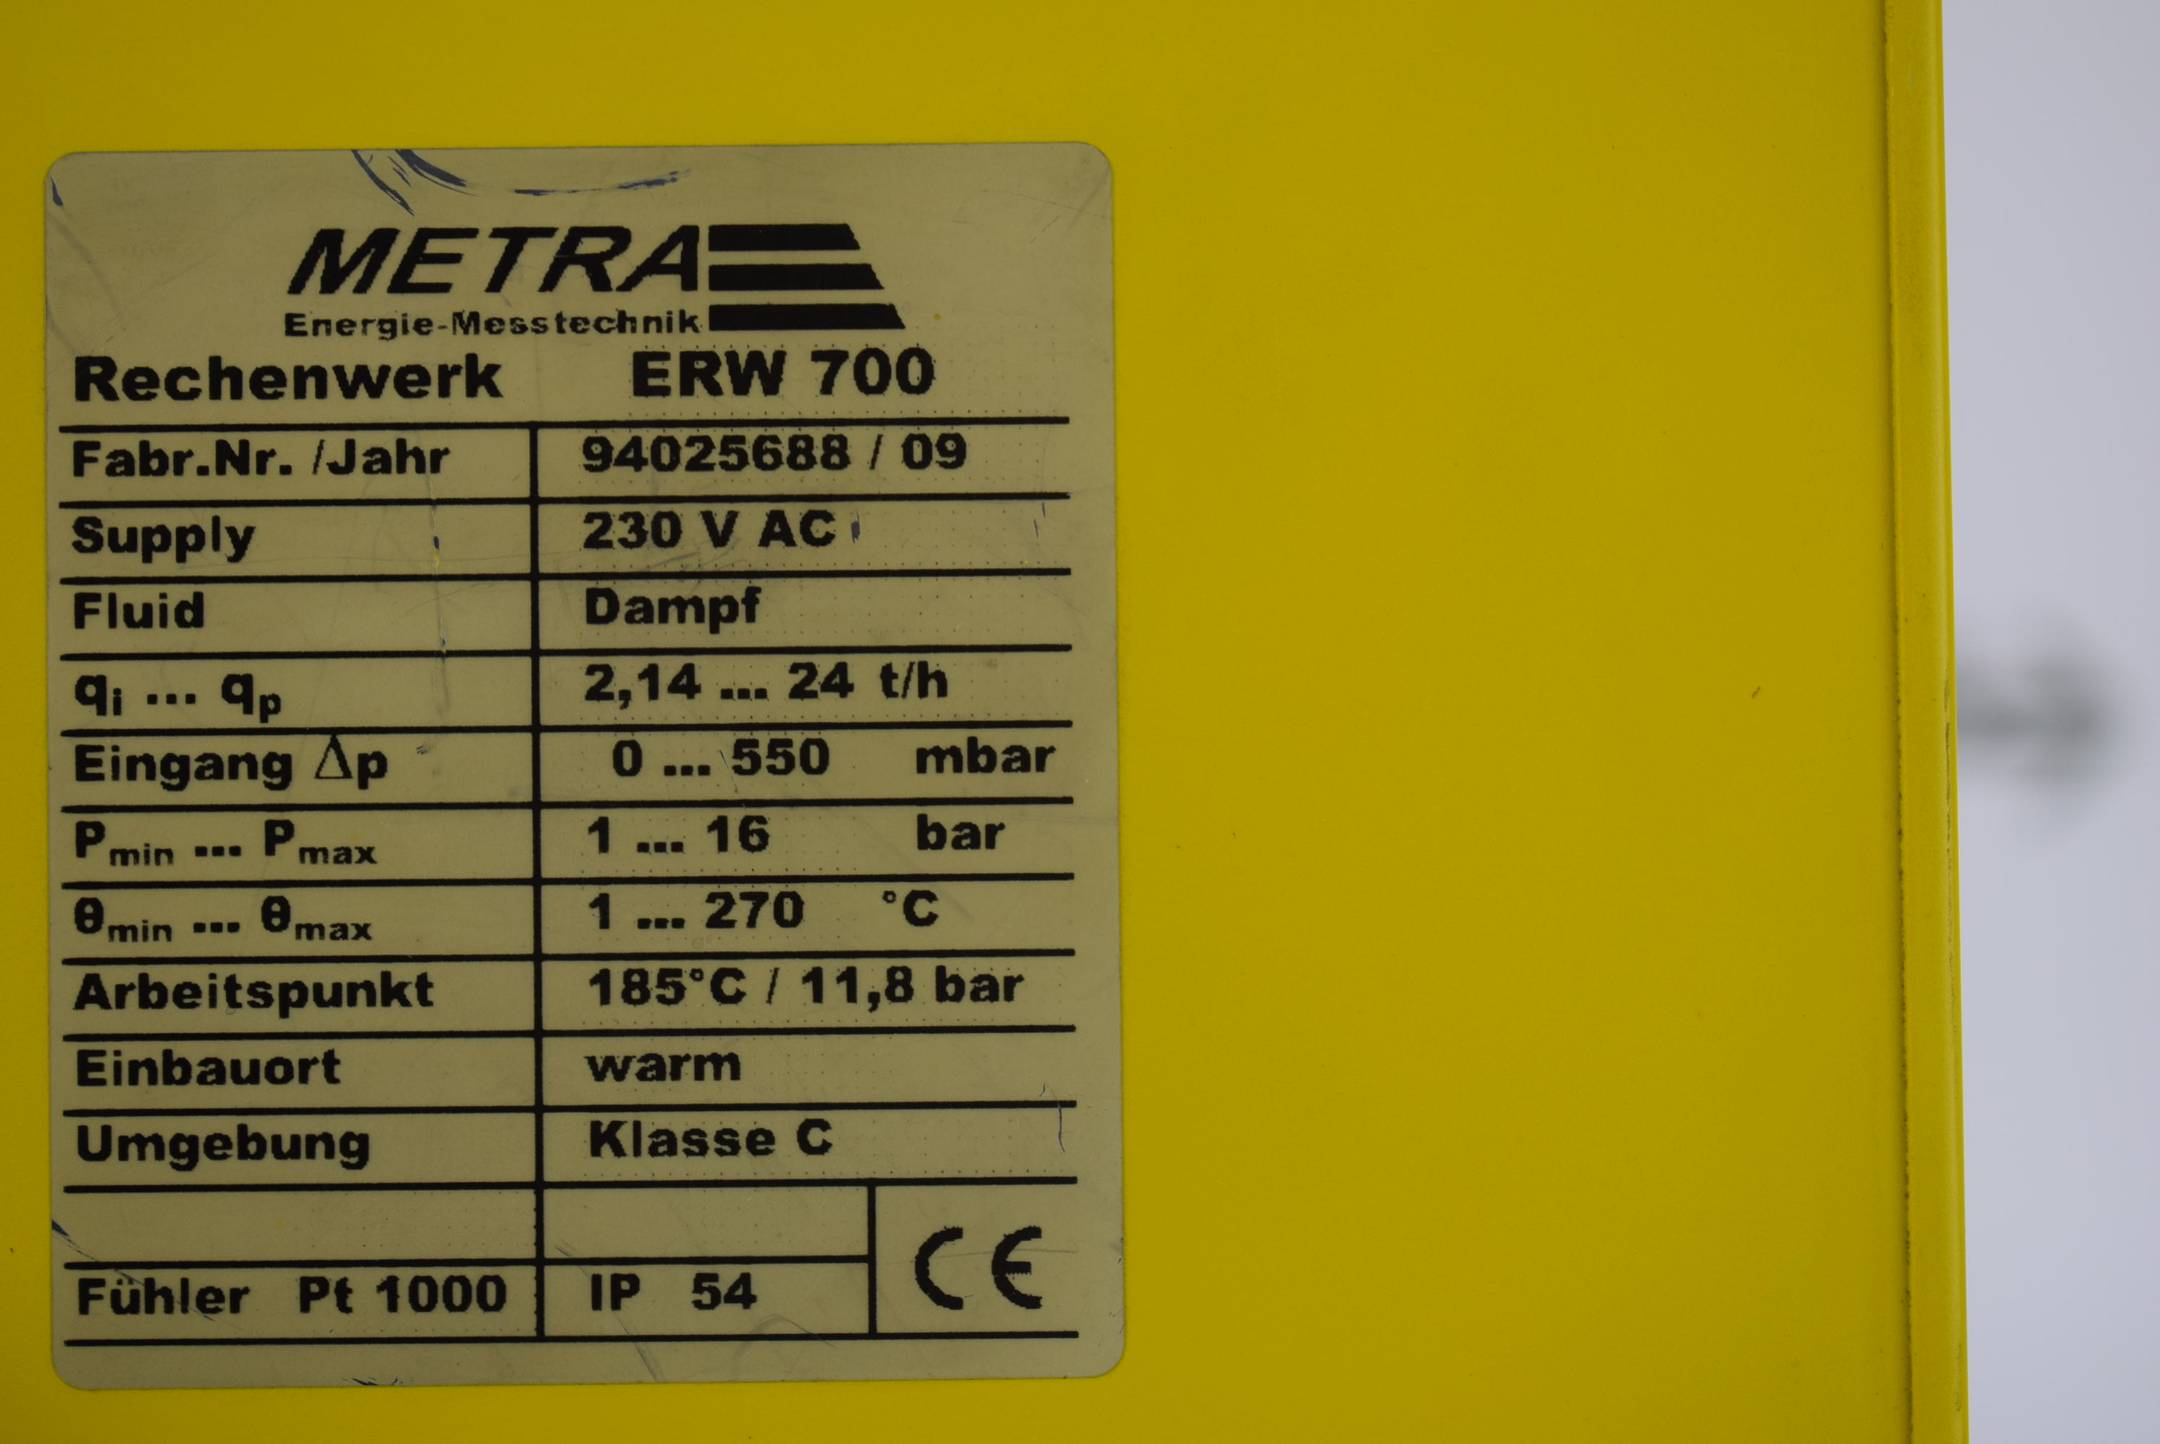 Metra Messystem Autarkon Energierechner ERW 700